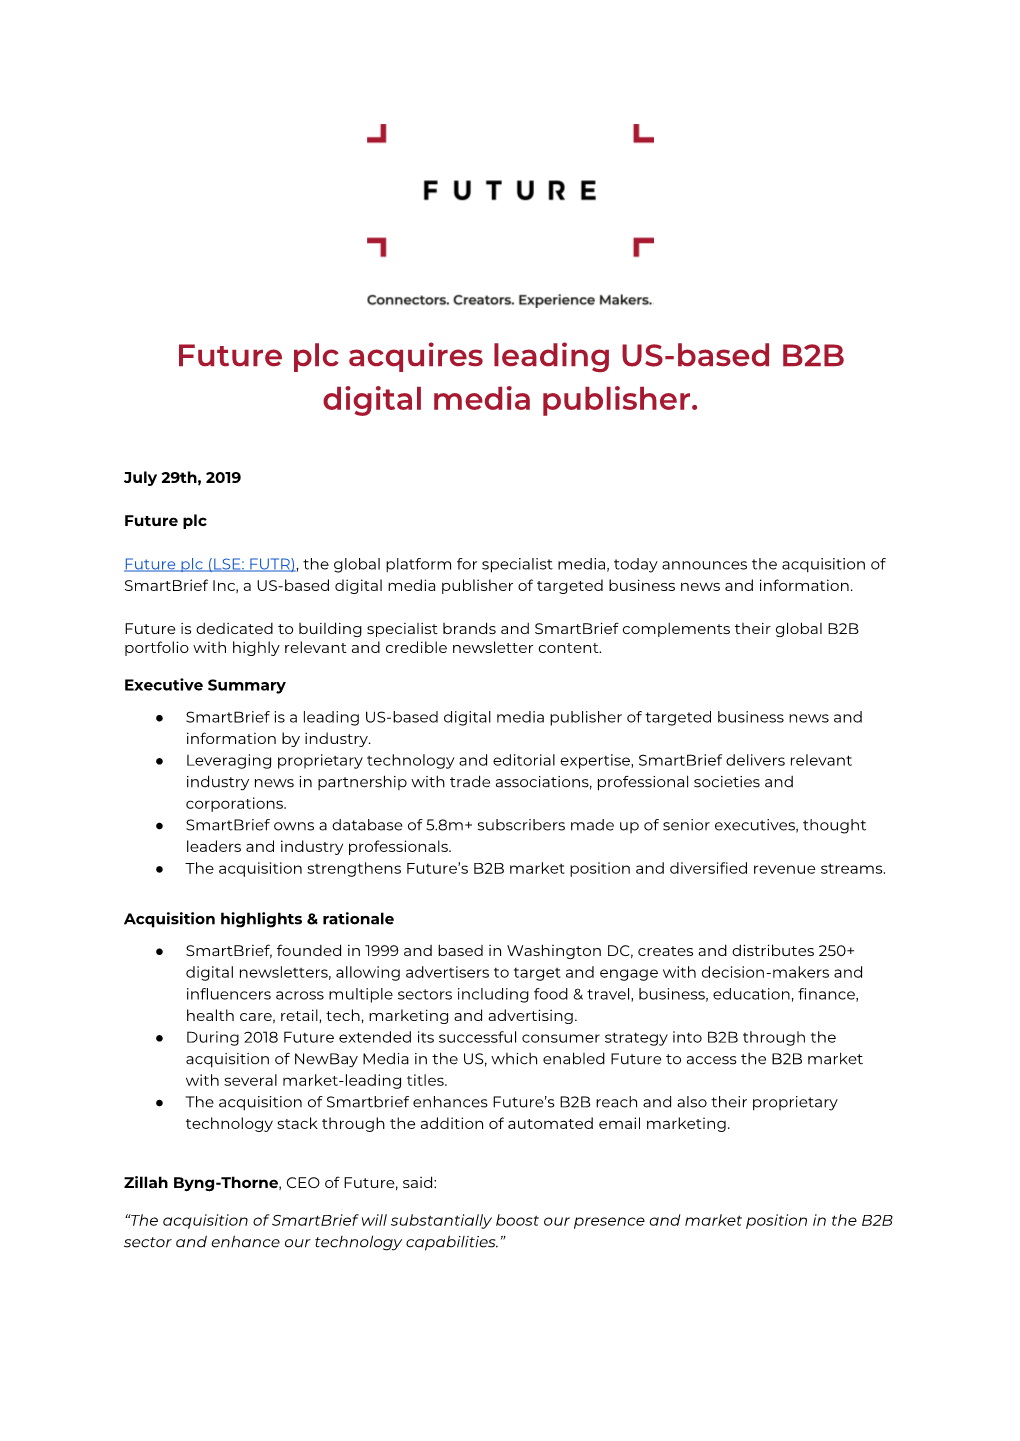 Future Plc Acquires Leading US-Based B2B Digital Media Publisher